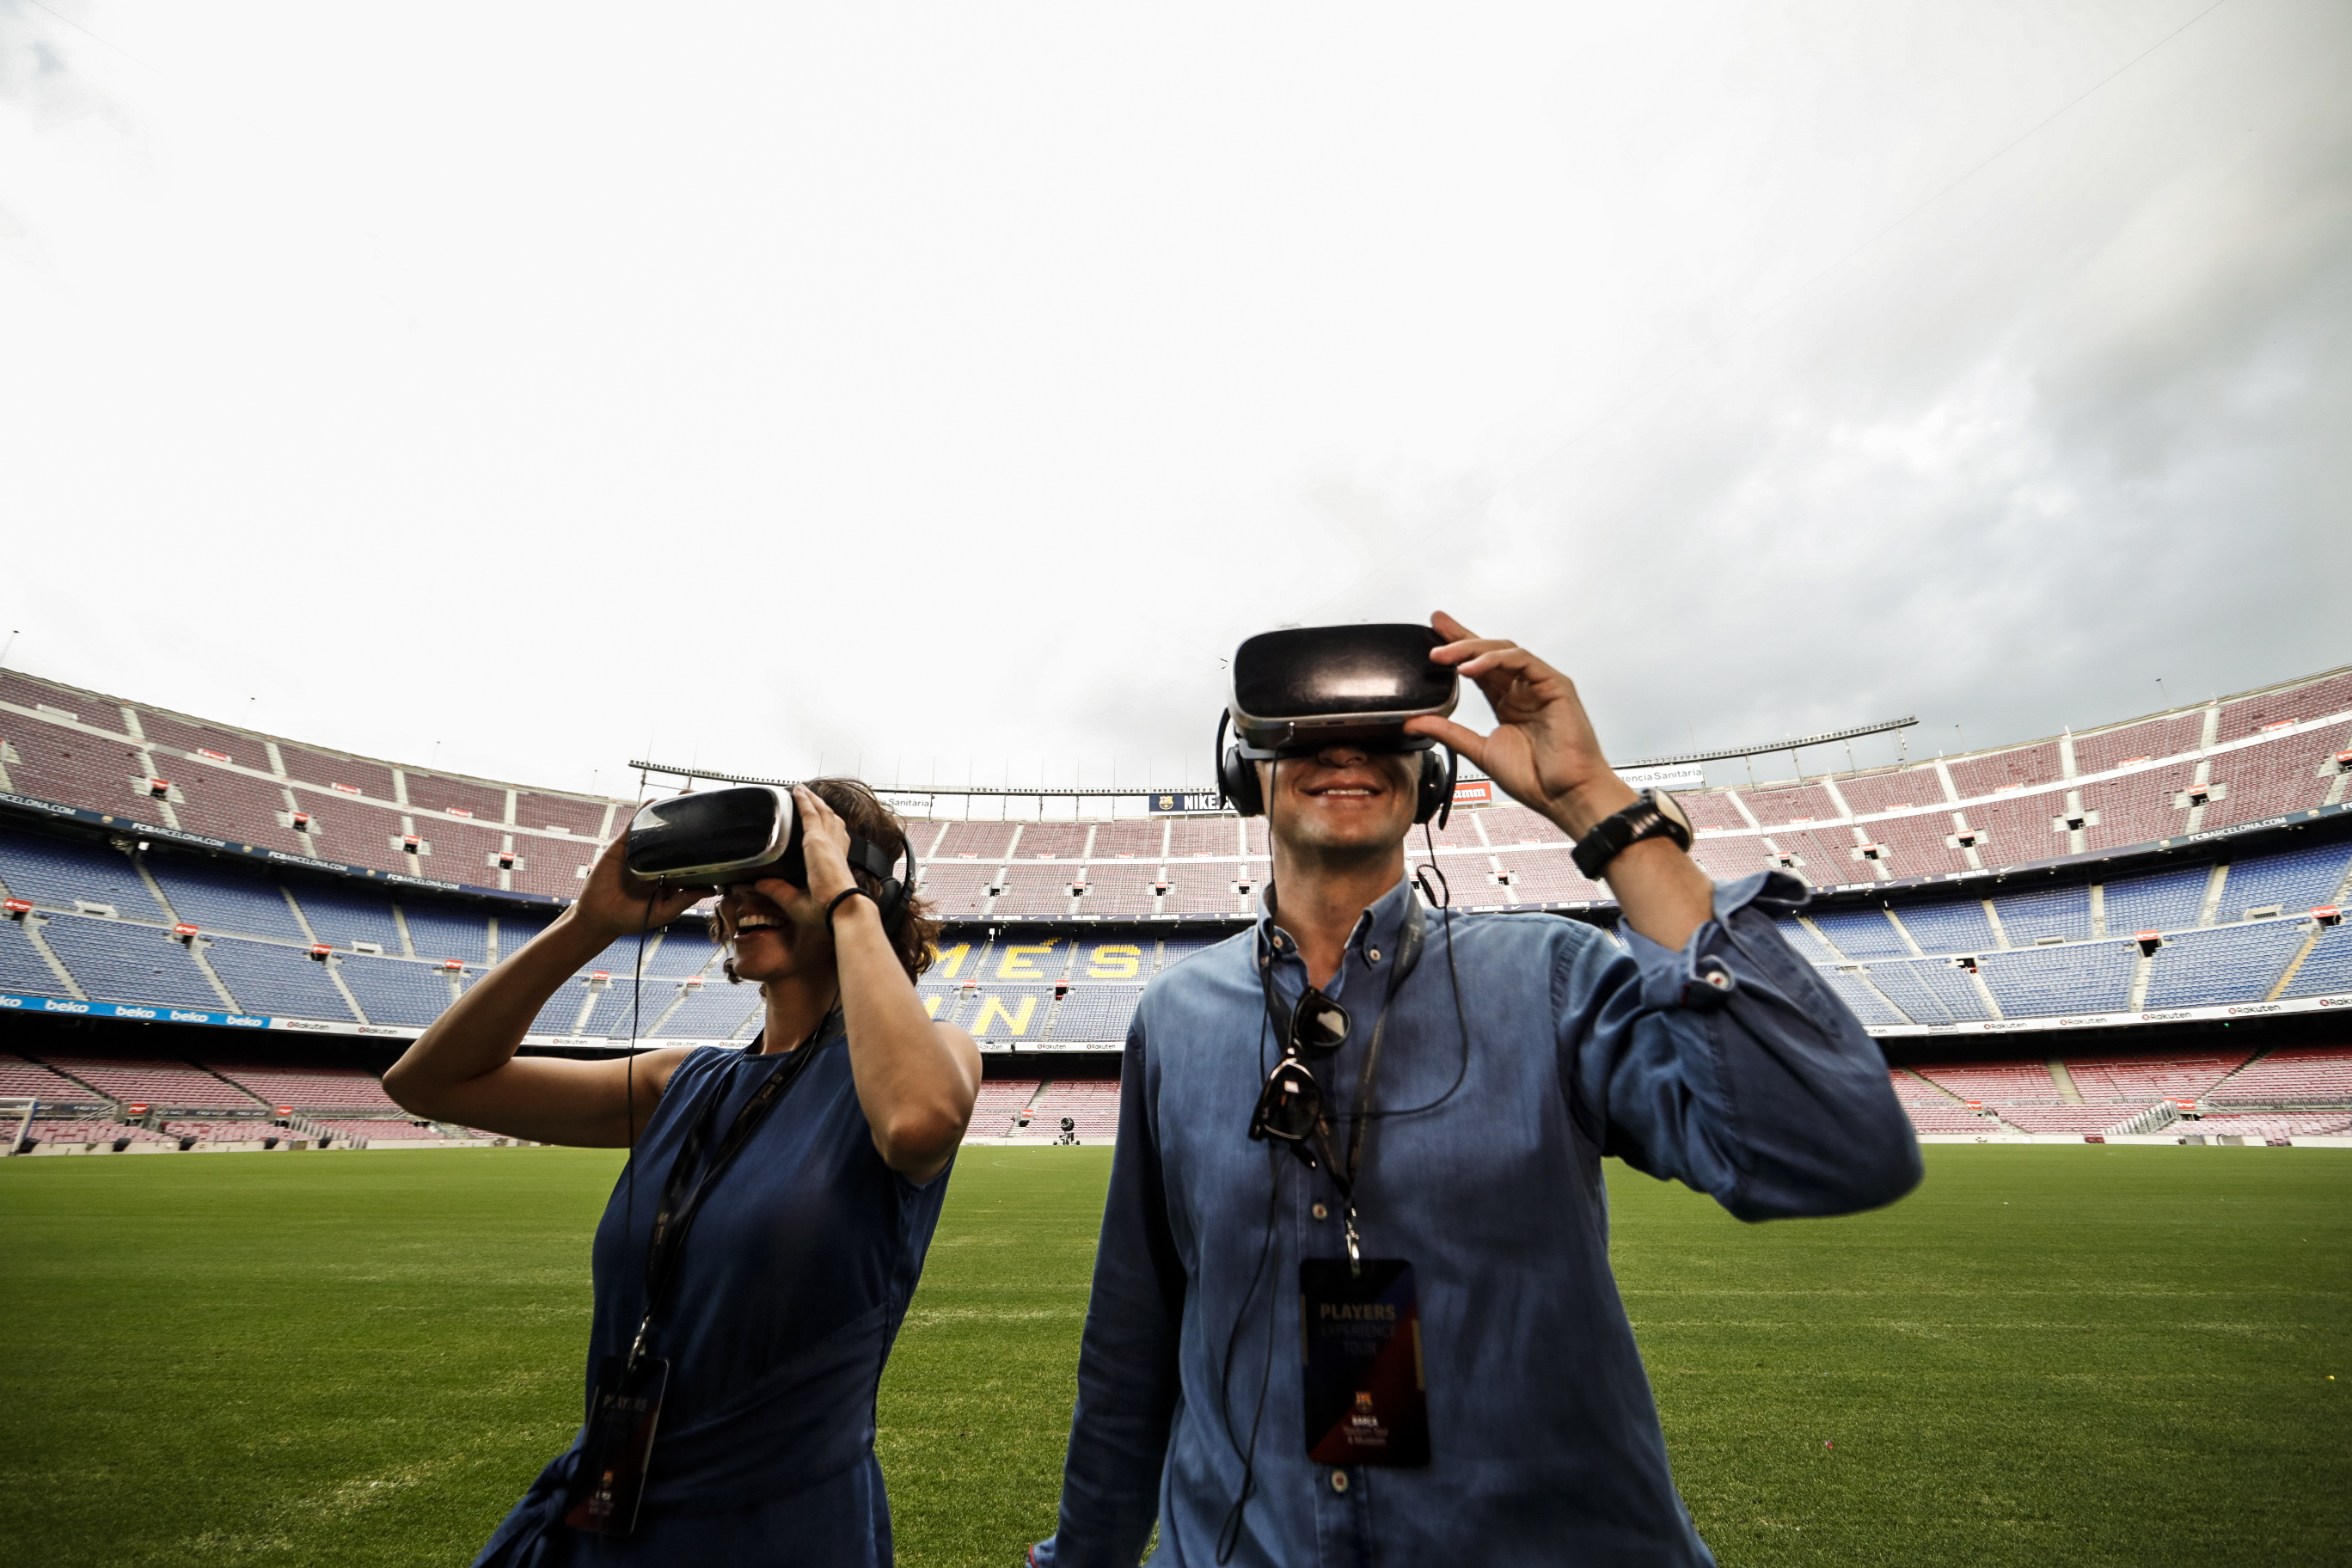 Players experience. ВР спорт. Дополненная реальность в футболе. VR футбол. Sport in VR.